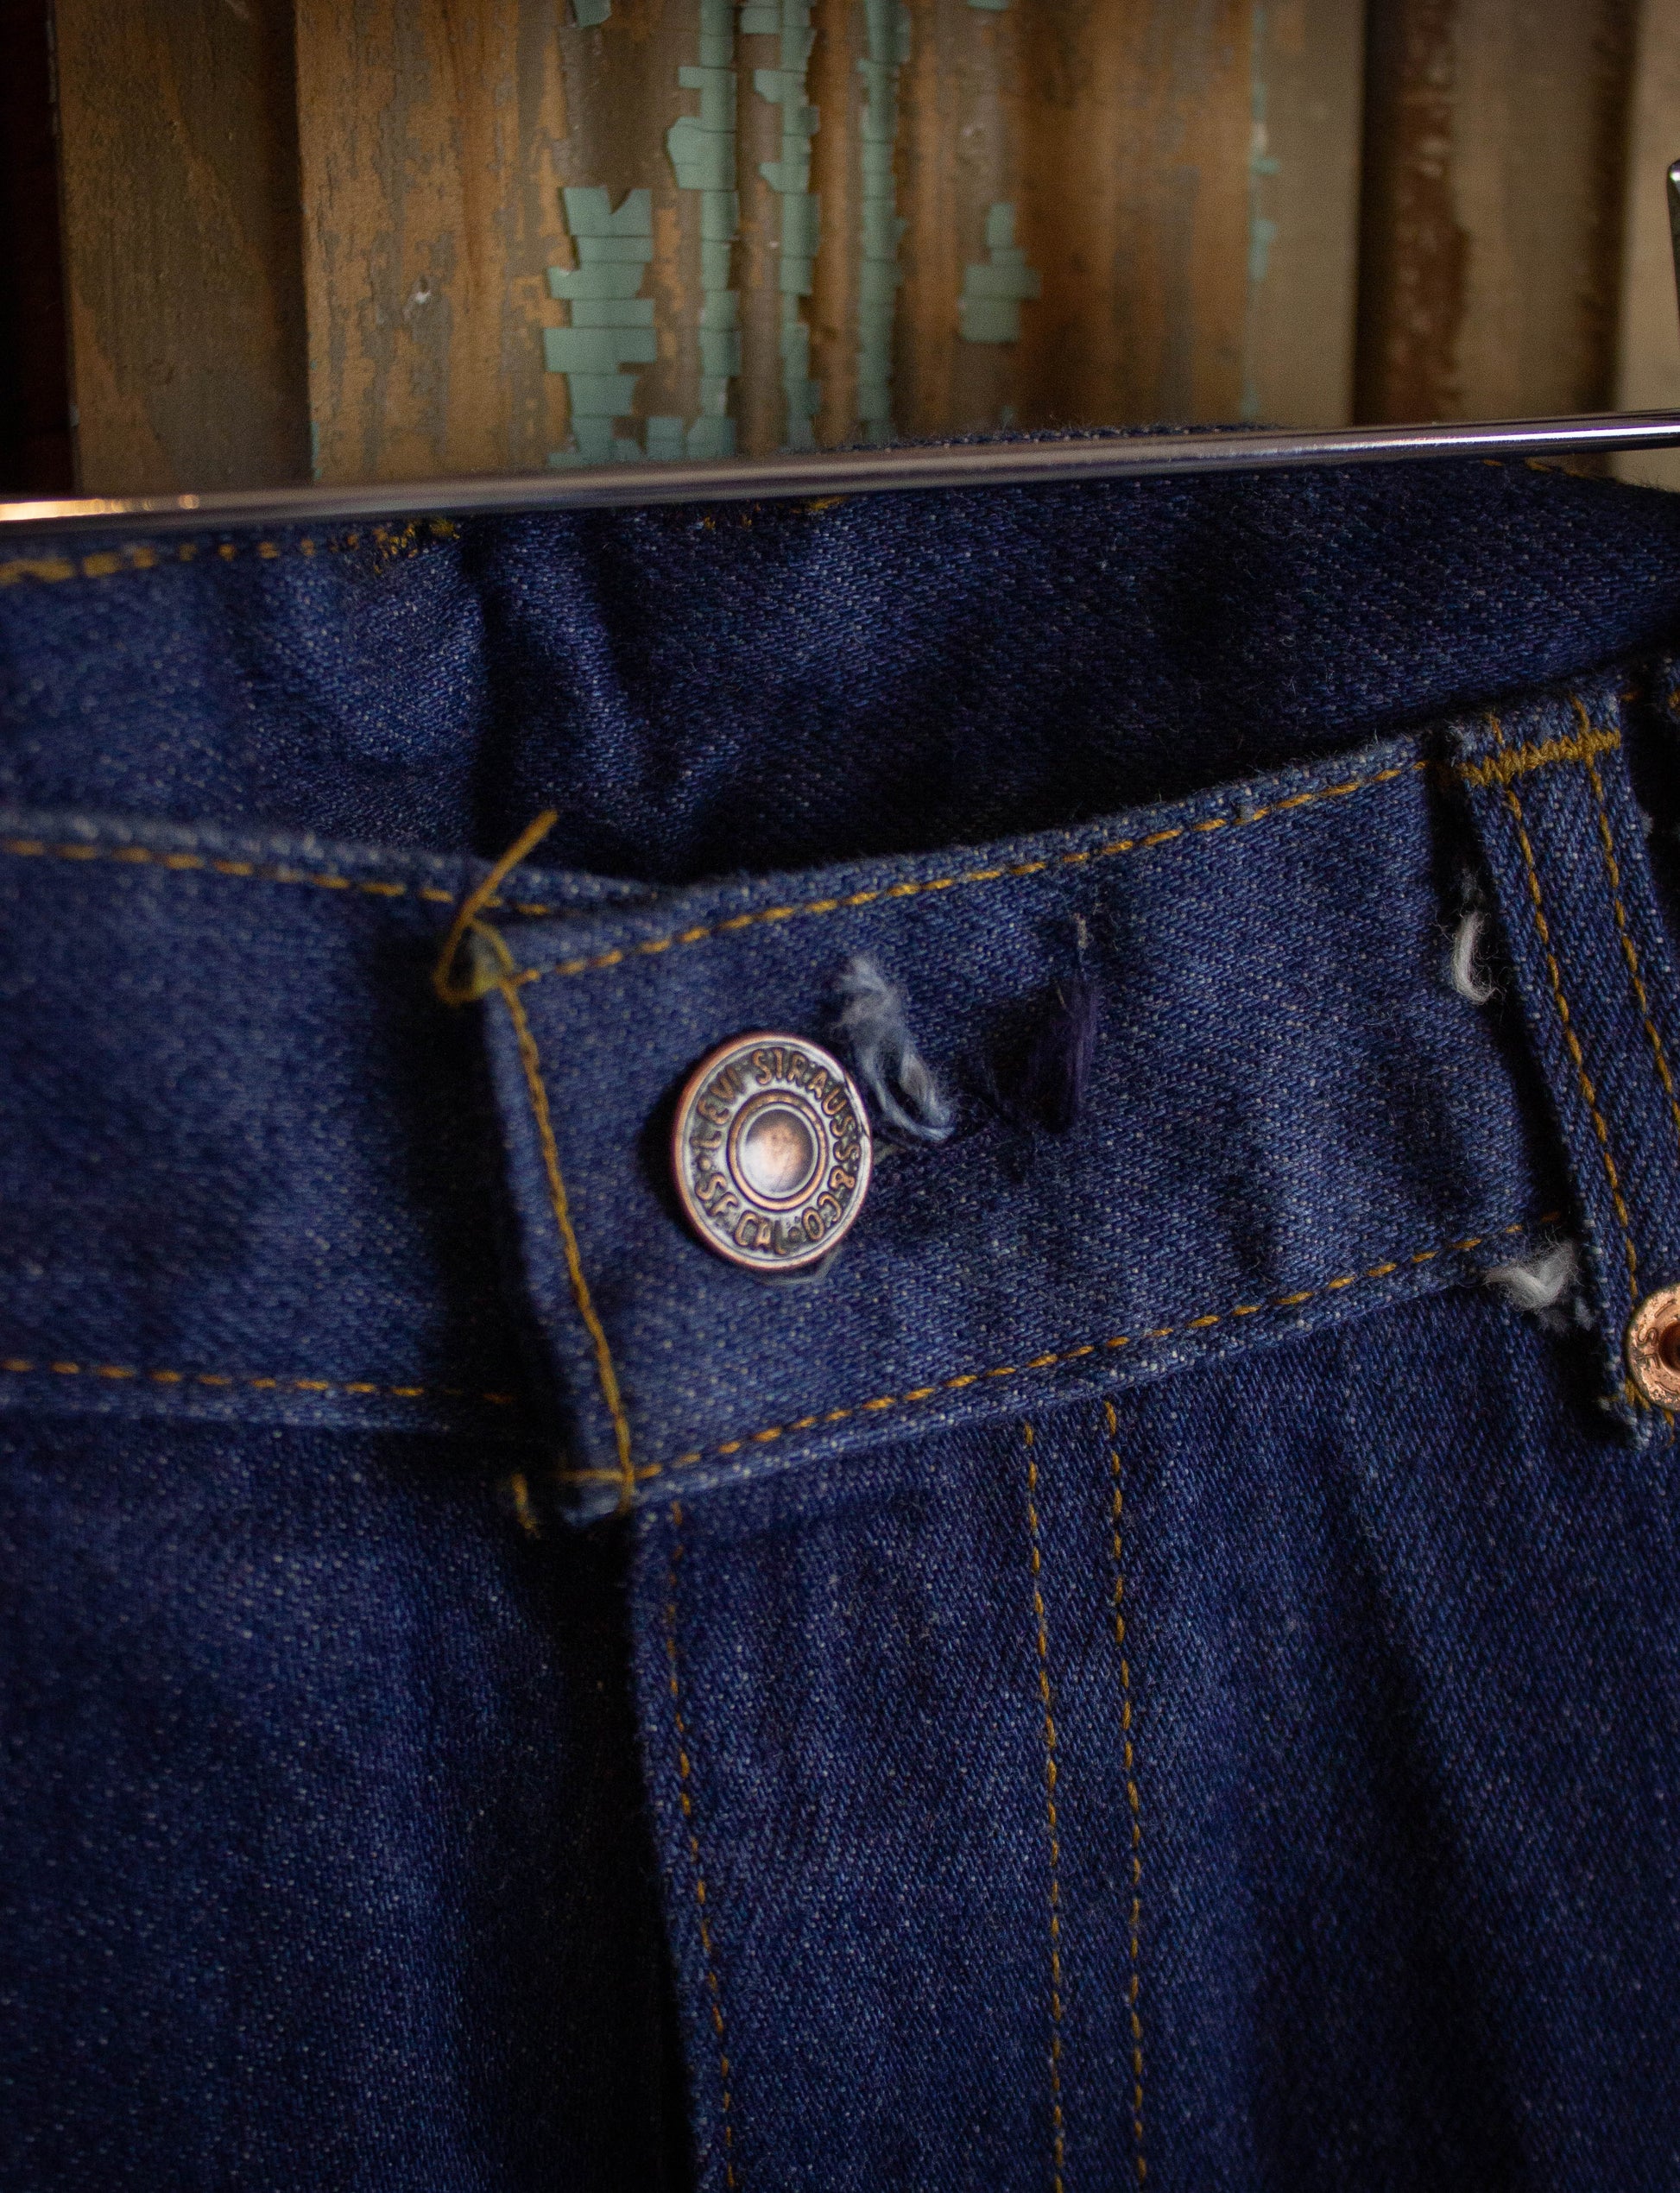 Vintage Levi's Deadstock Orange Tab Olympics Denim Jeans 1980 Dark Wash 24x33.5